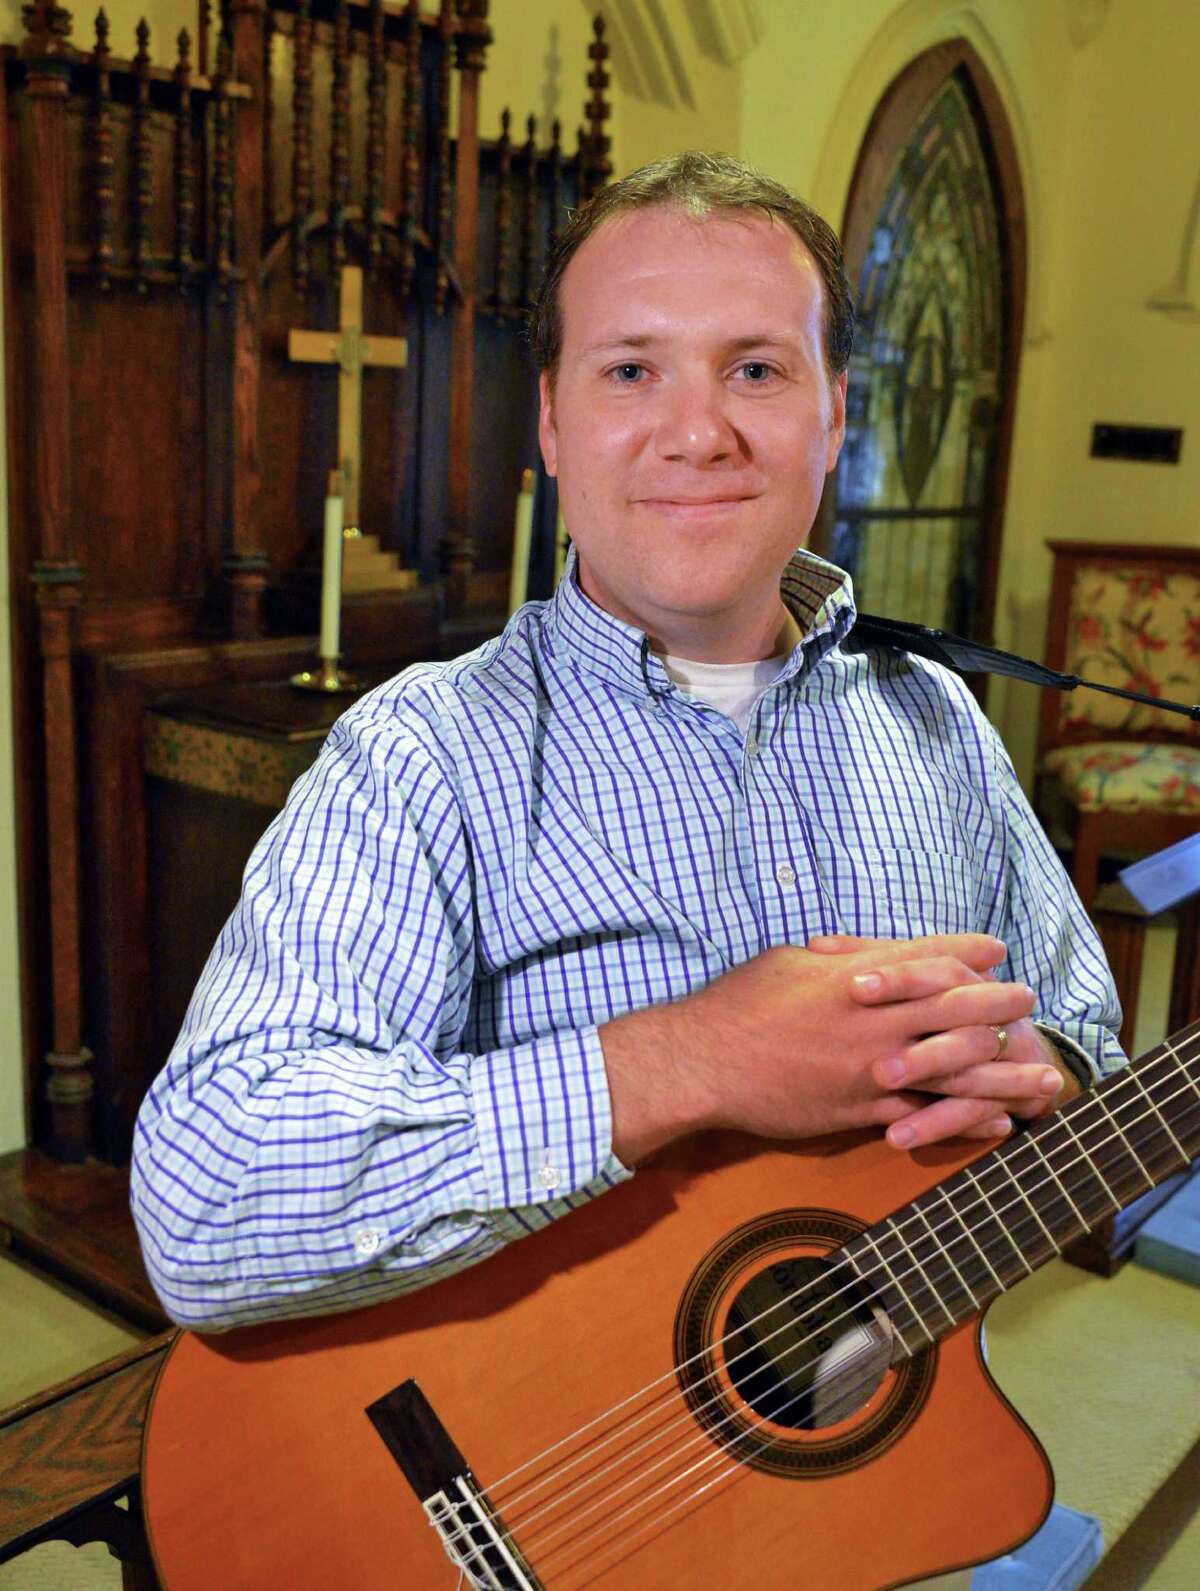 Doug Esmond, Music Coordinator at First United Methodist Church in Delmar Tuesday Sept. 25, 2012. (John Carl D'Annibale / Times Union)